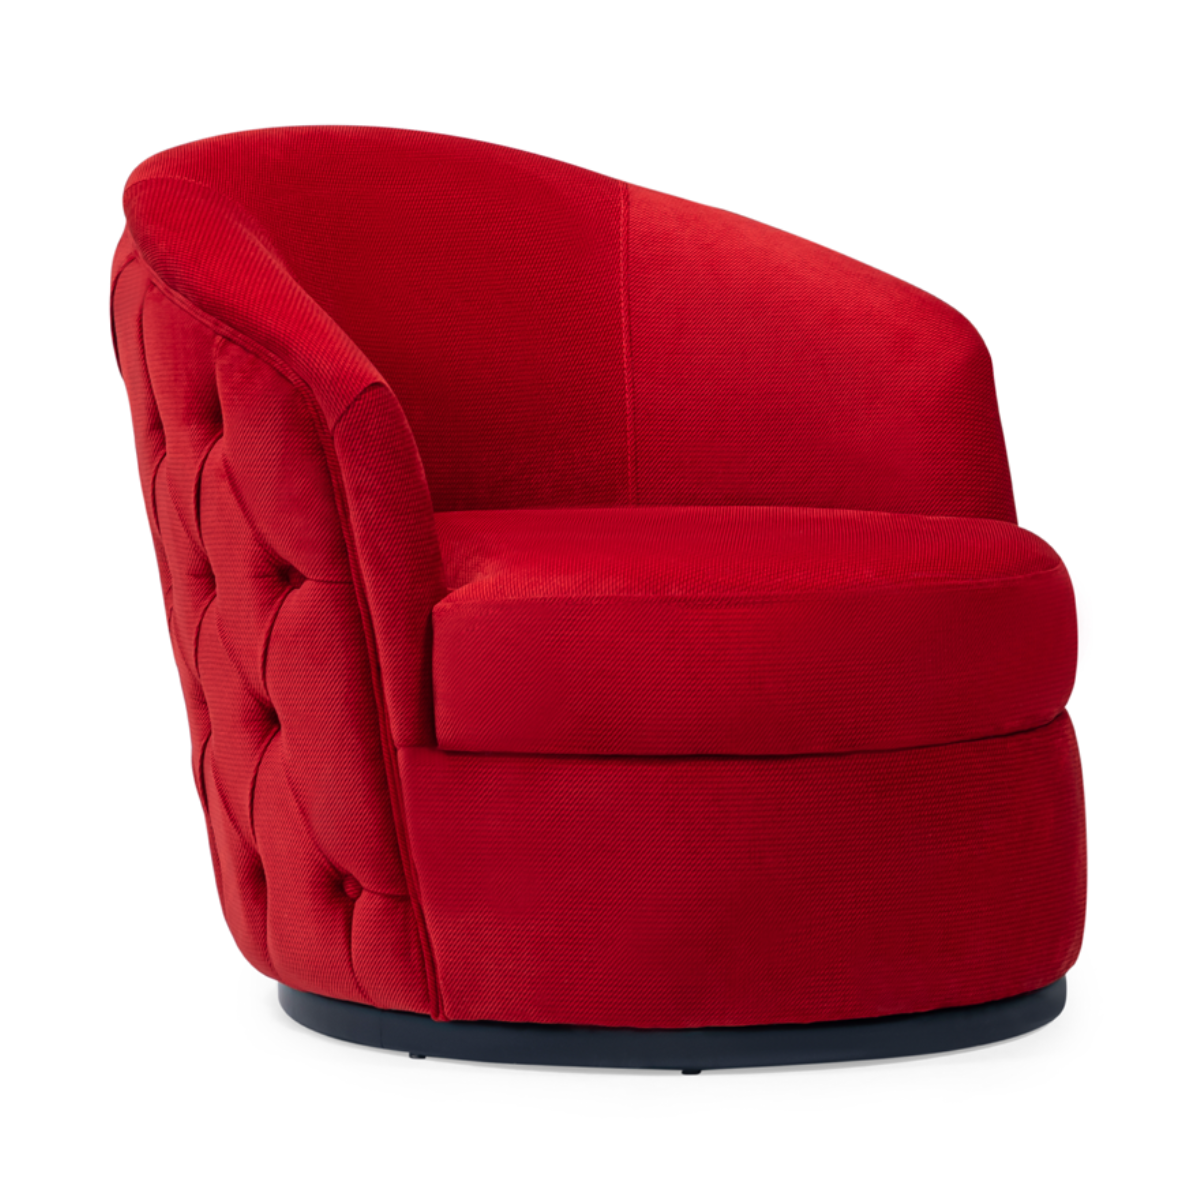 Octavia Lounge Chair